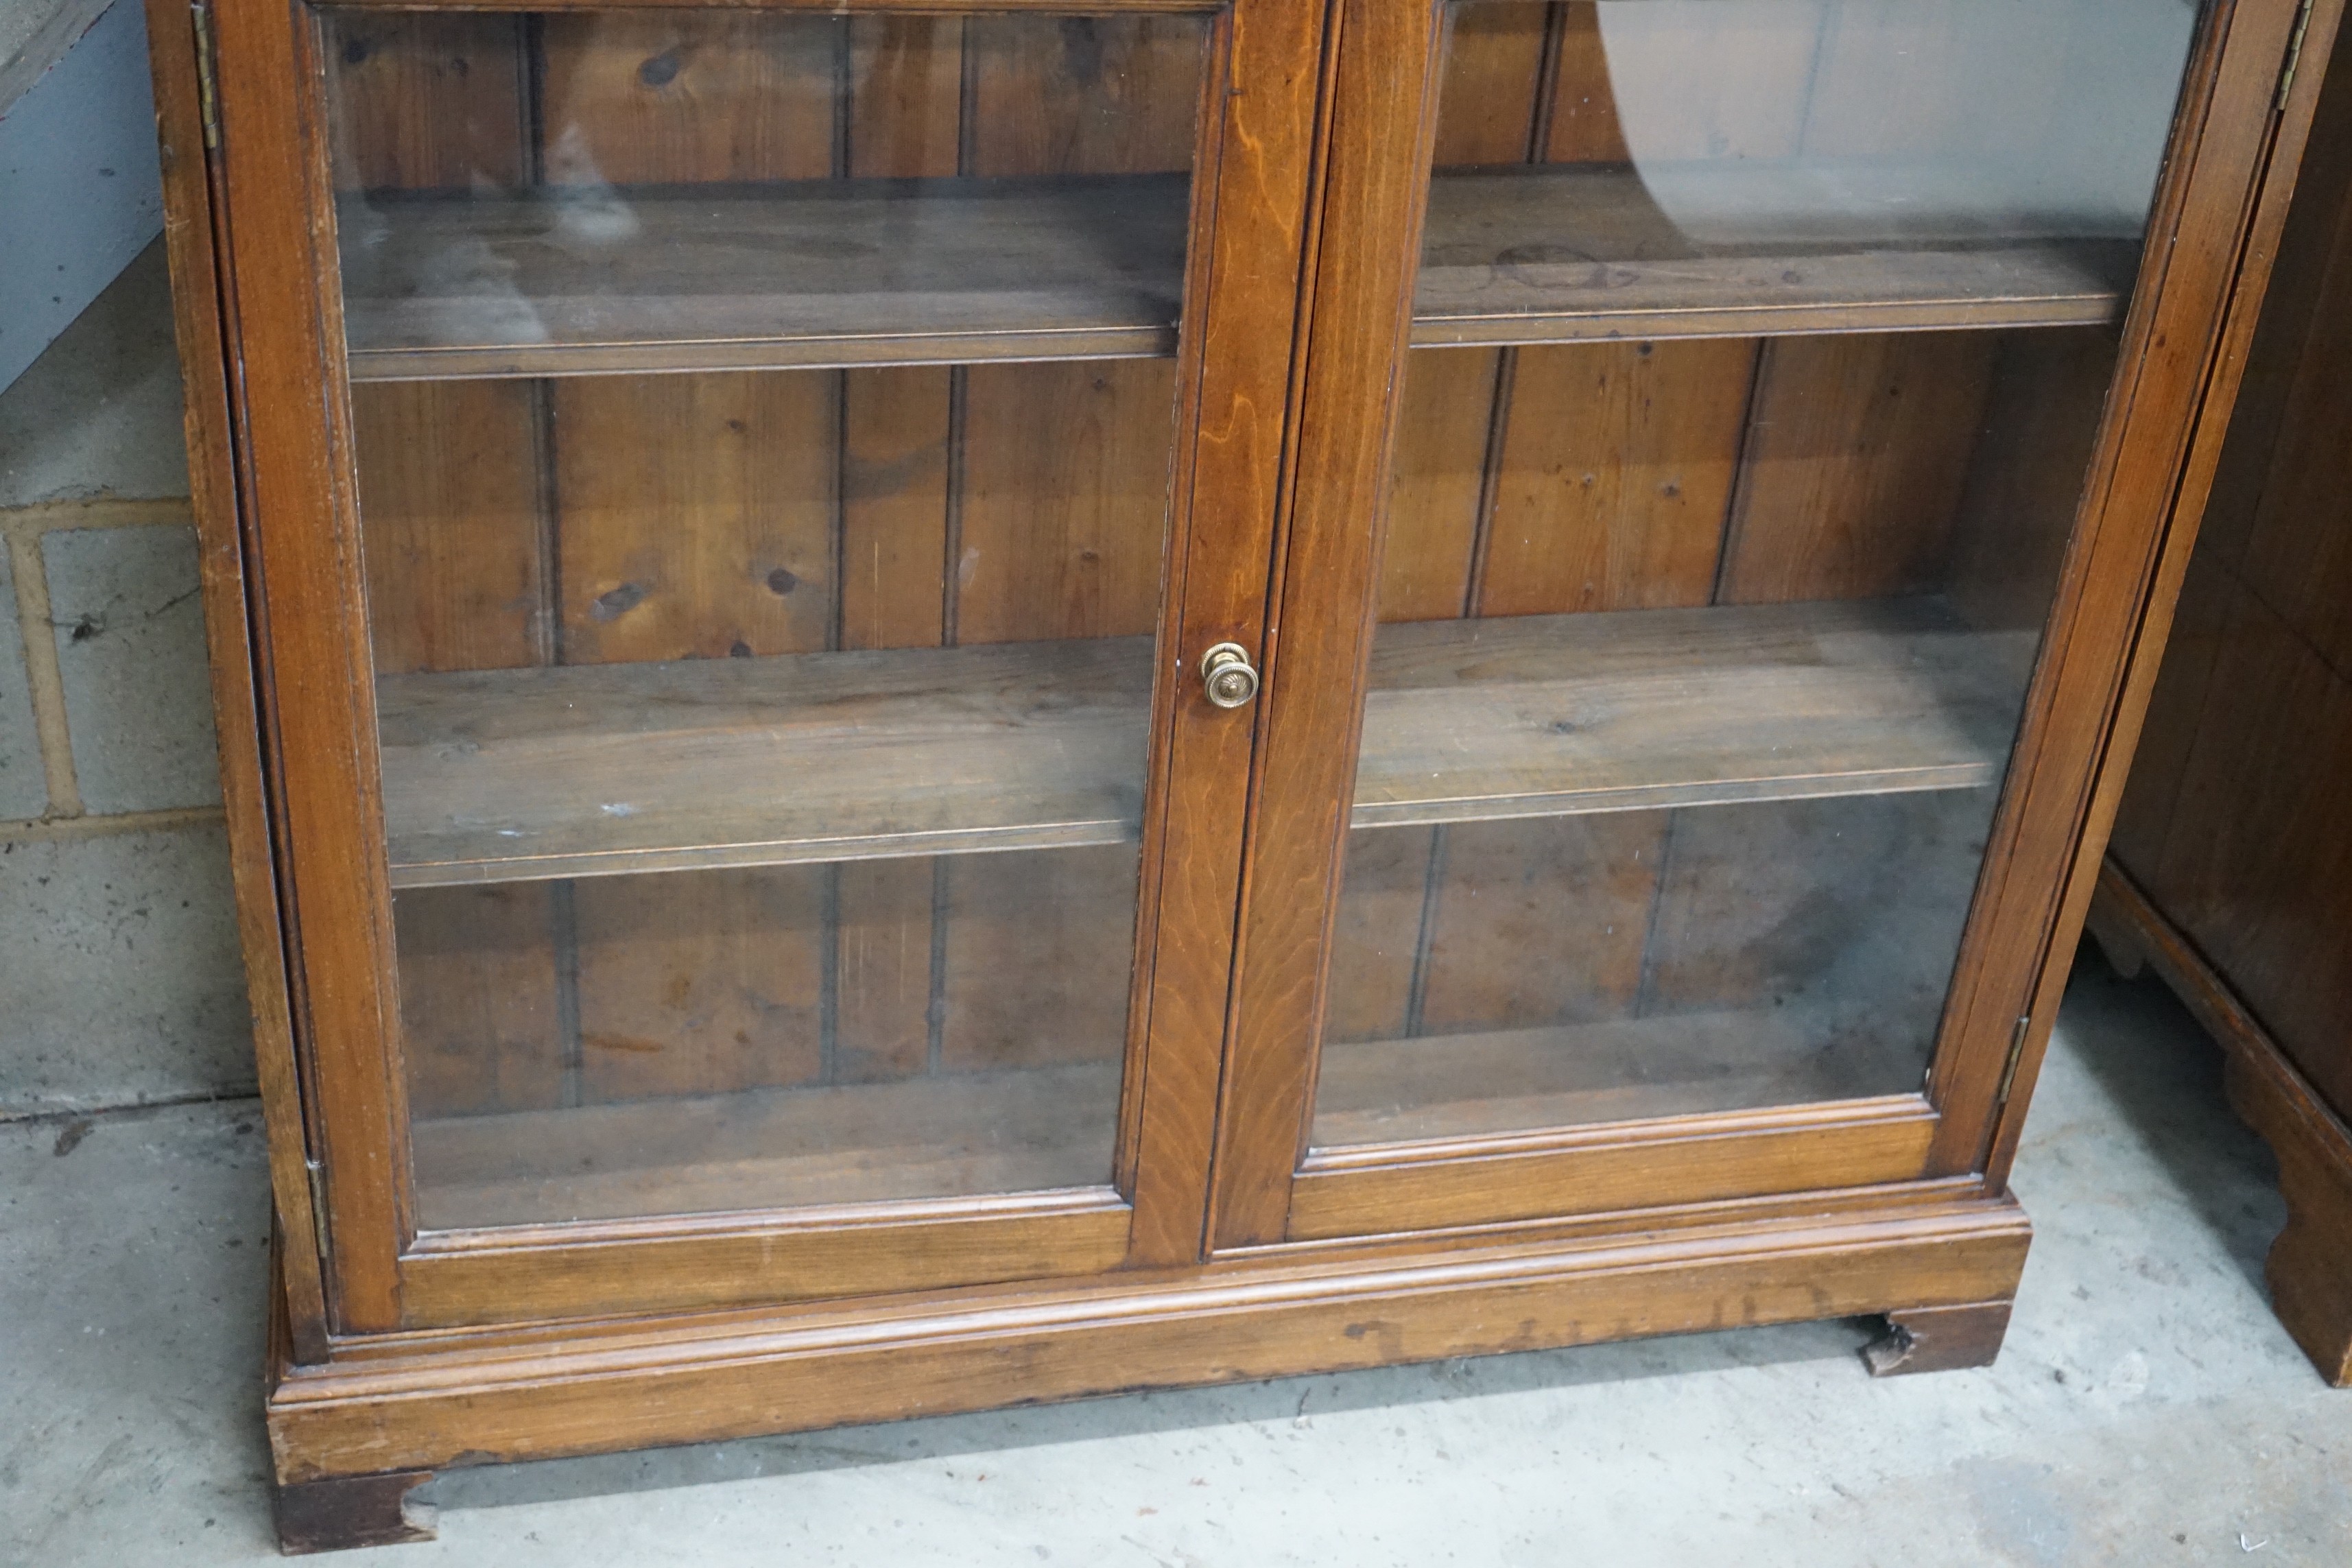 A Victorian style glazed walnut bookcase width 110cms, depth 26cms, height 136cms.